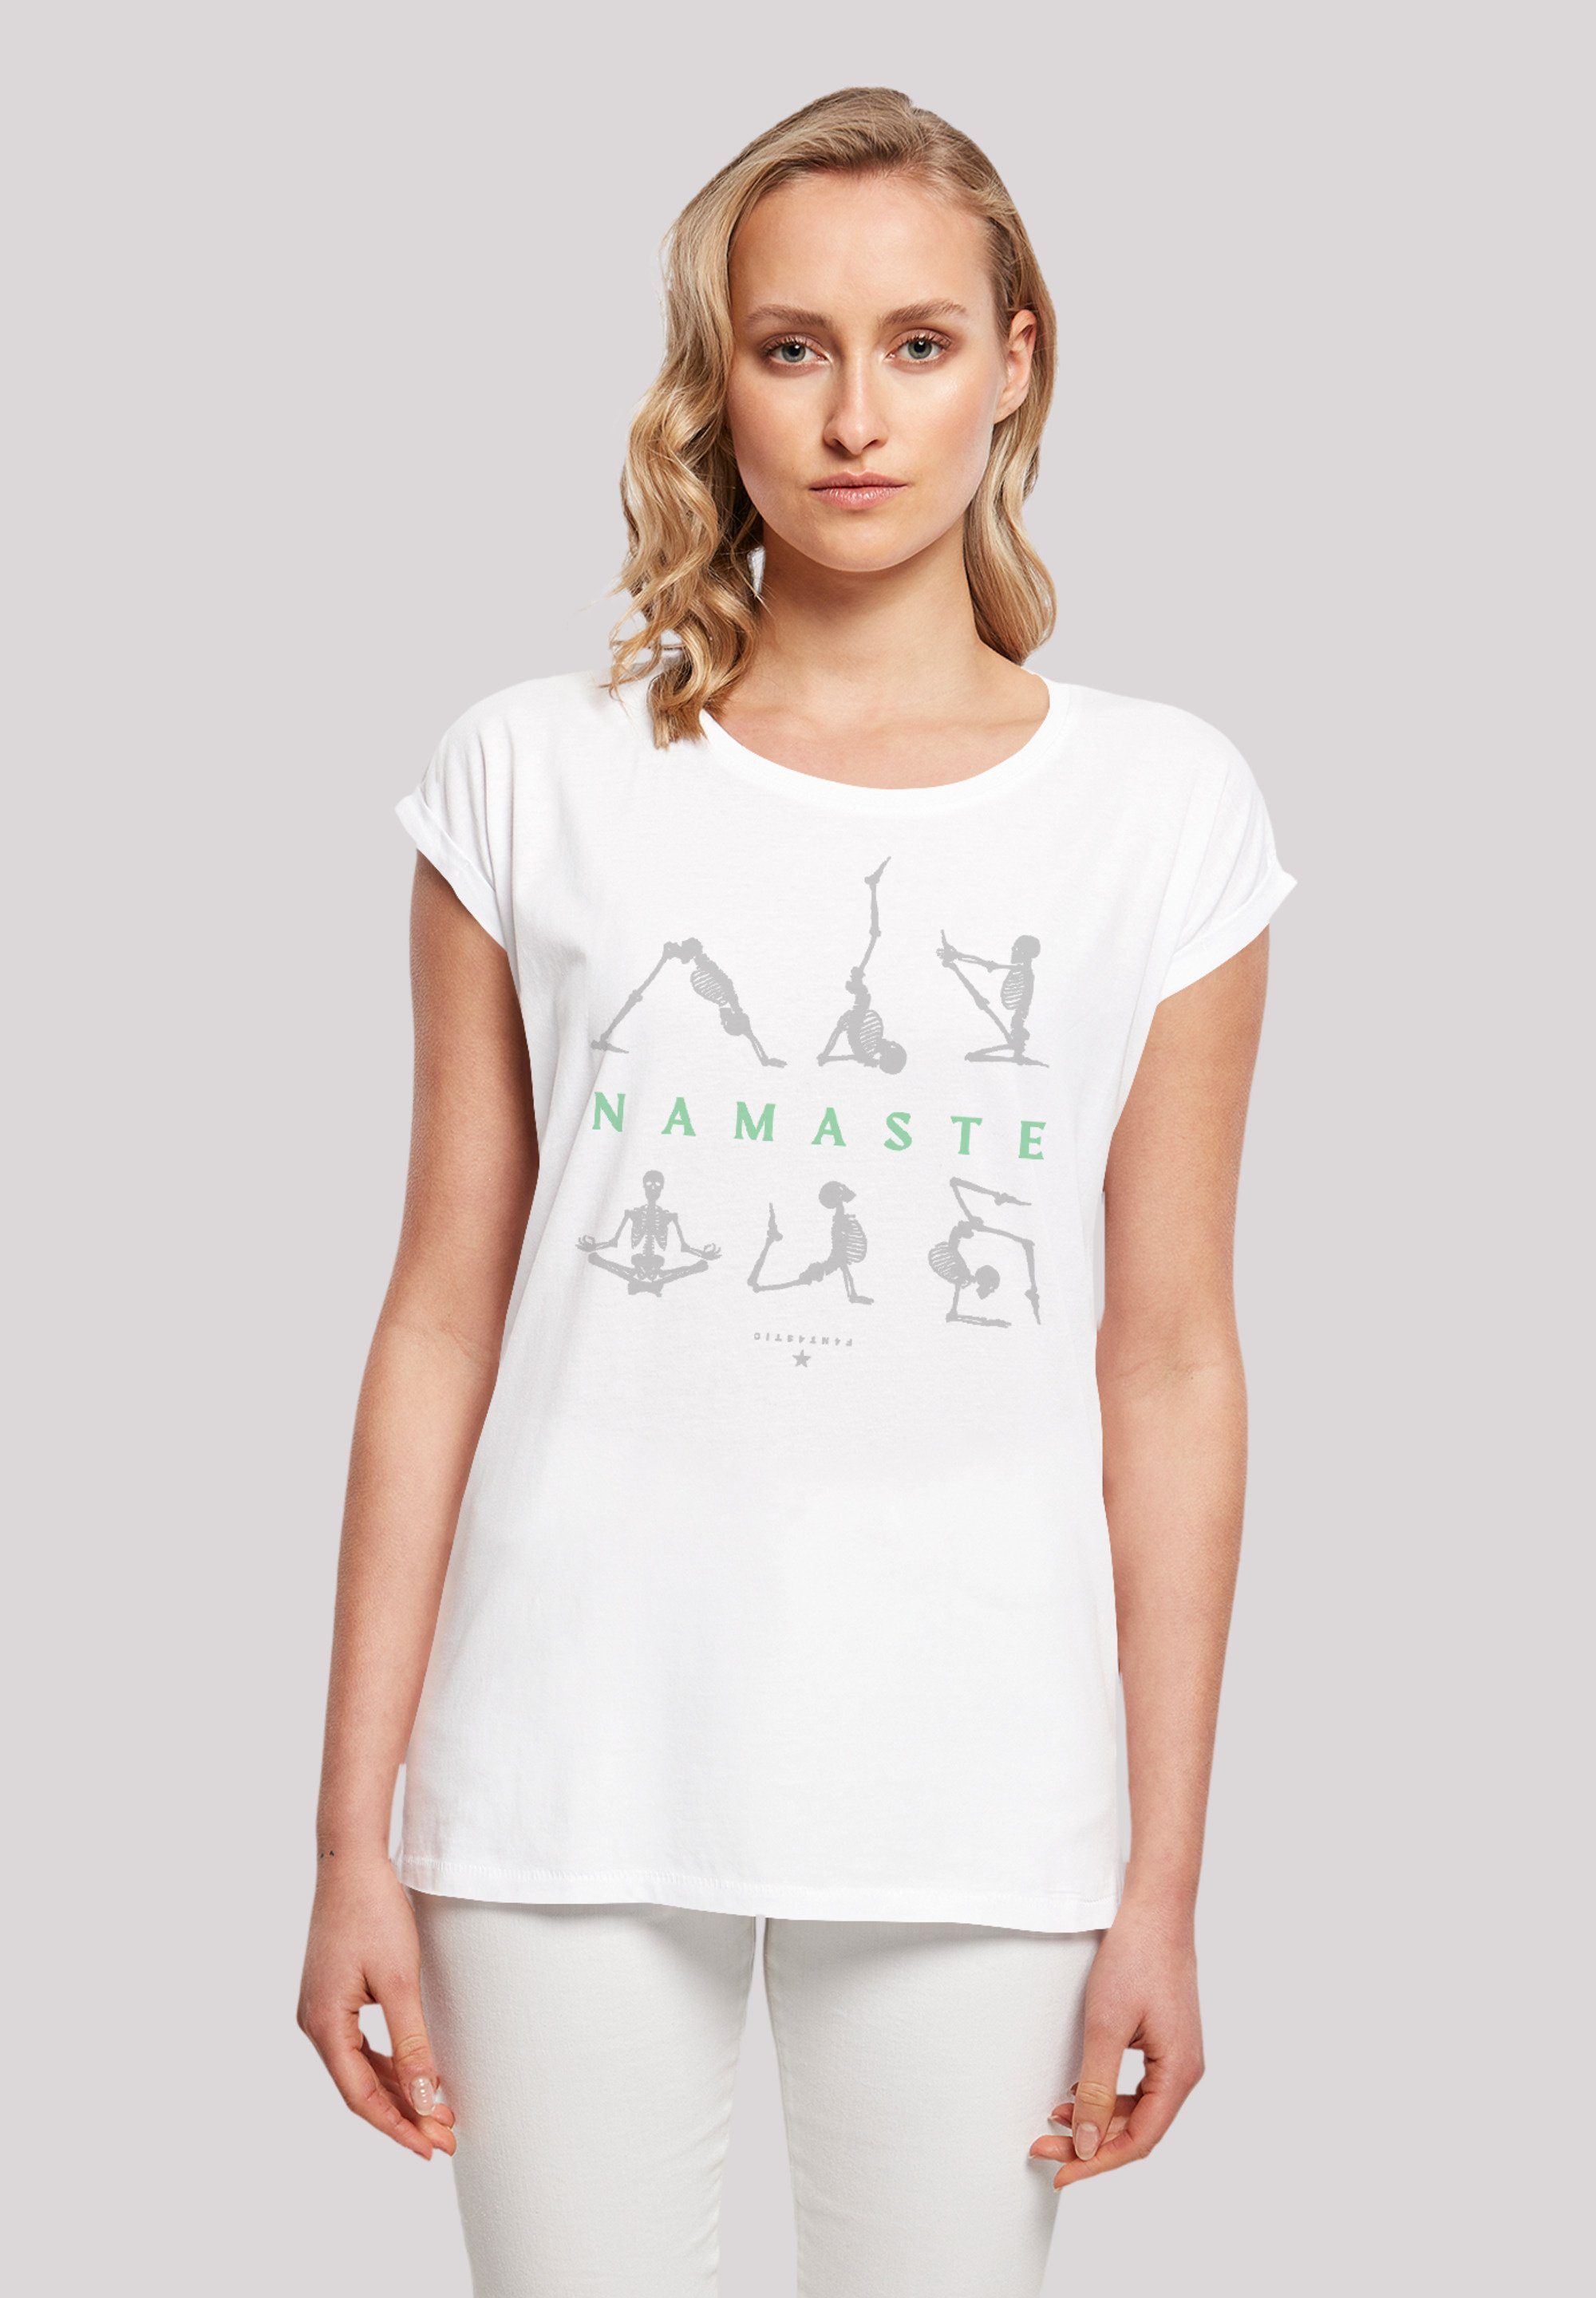 F4NT4STIC T-Shirt Namaste Ärmel Langer verkürzte Halloween Schnitt Yoga Print, Skelett und